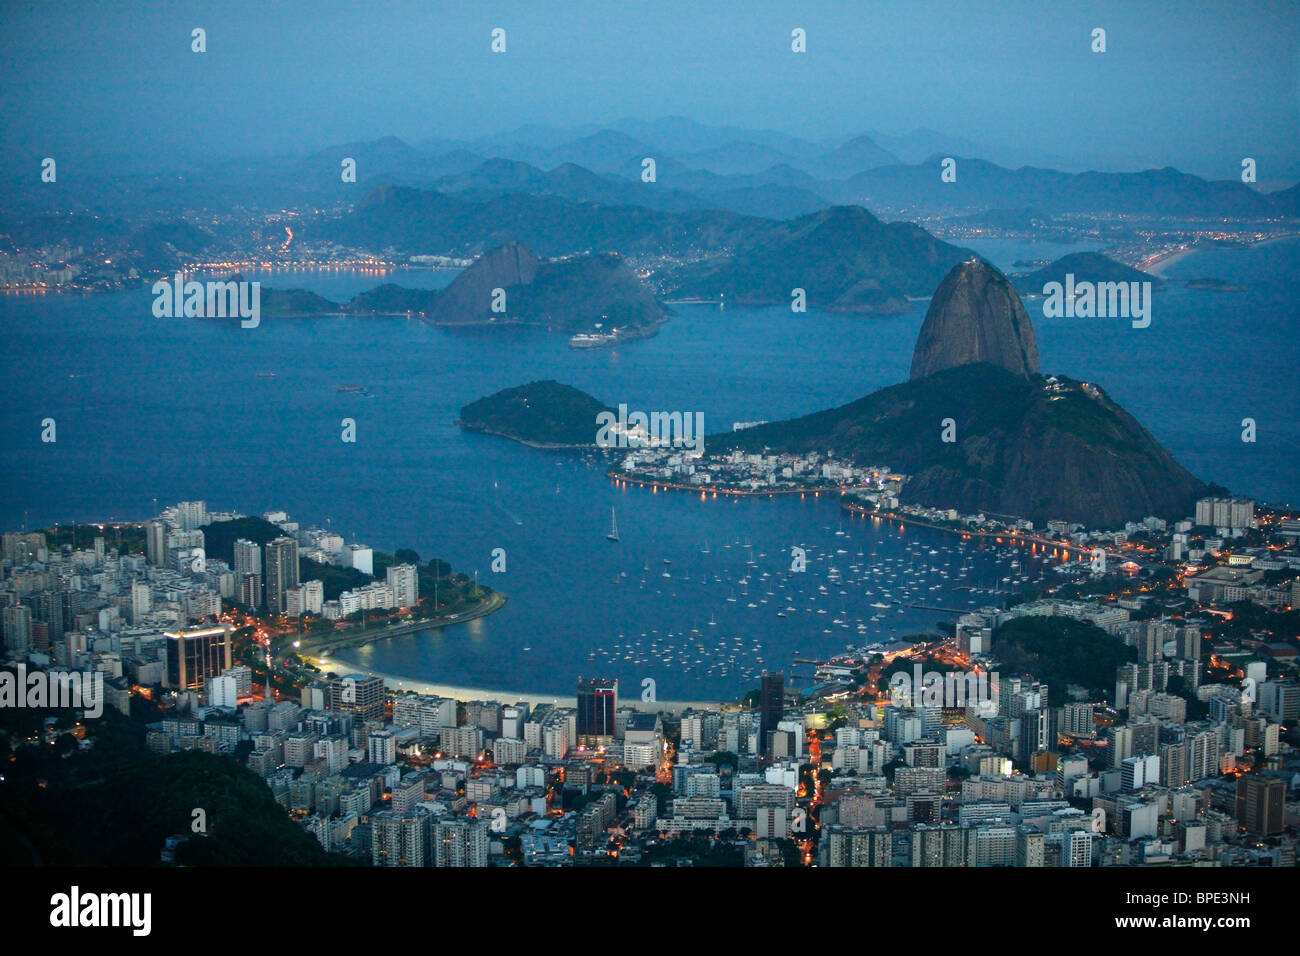 View of the Pao Acucar or Sugar loaf mountain and the bay of Botafogo, Rio de Janeiro, Brazil. Stock Photo